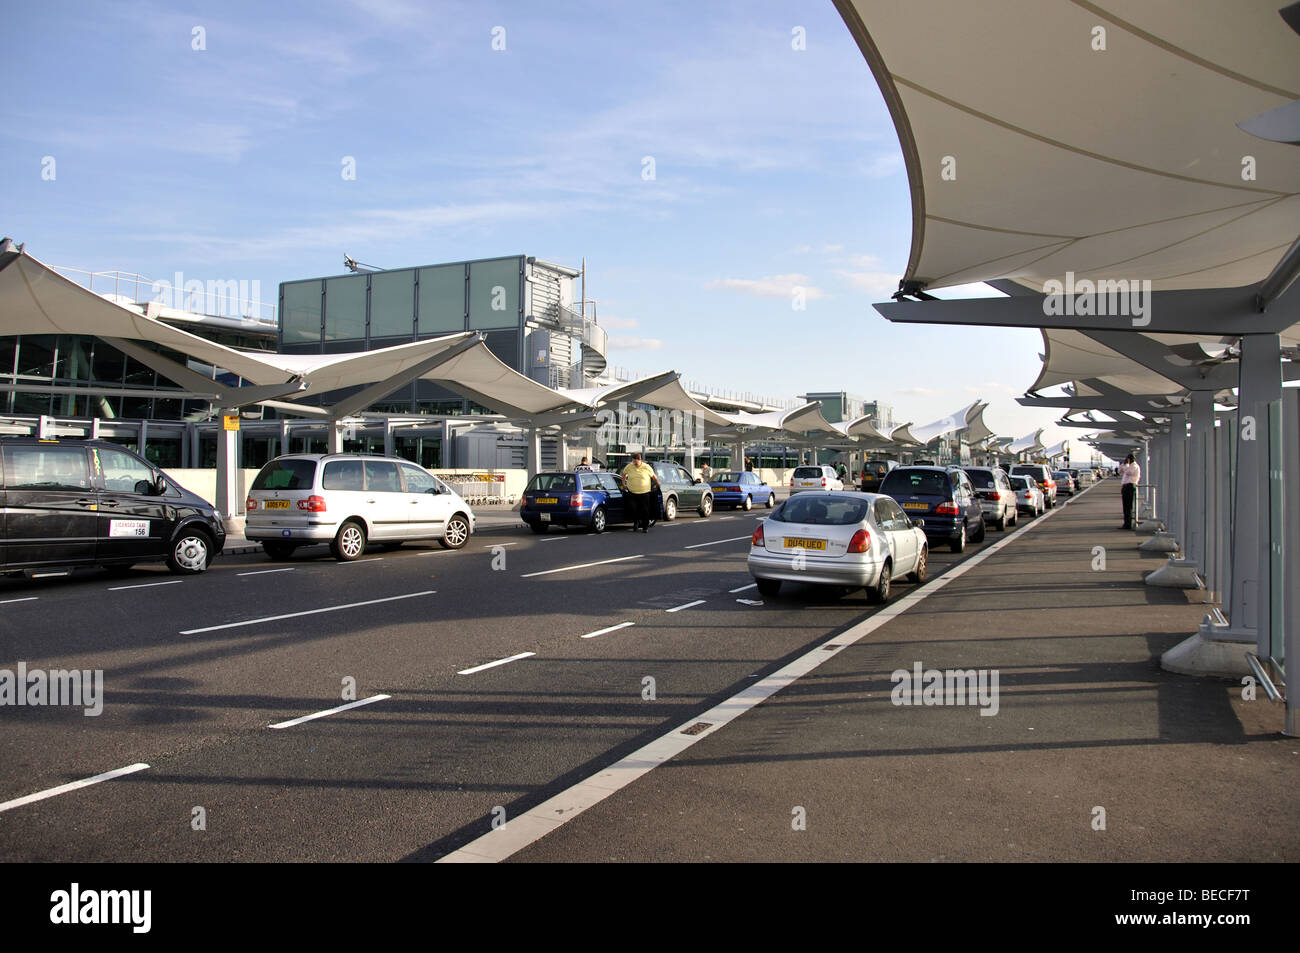 907 Heathrow Terminal 5 Images, Stock Photos, 3D objects, & Vectors